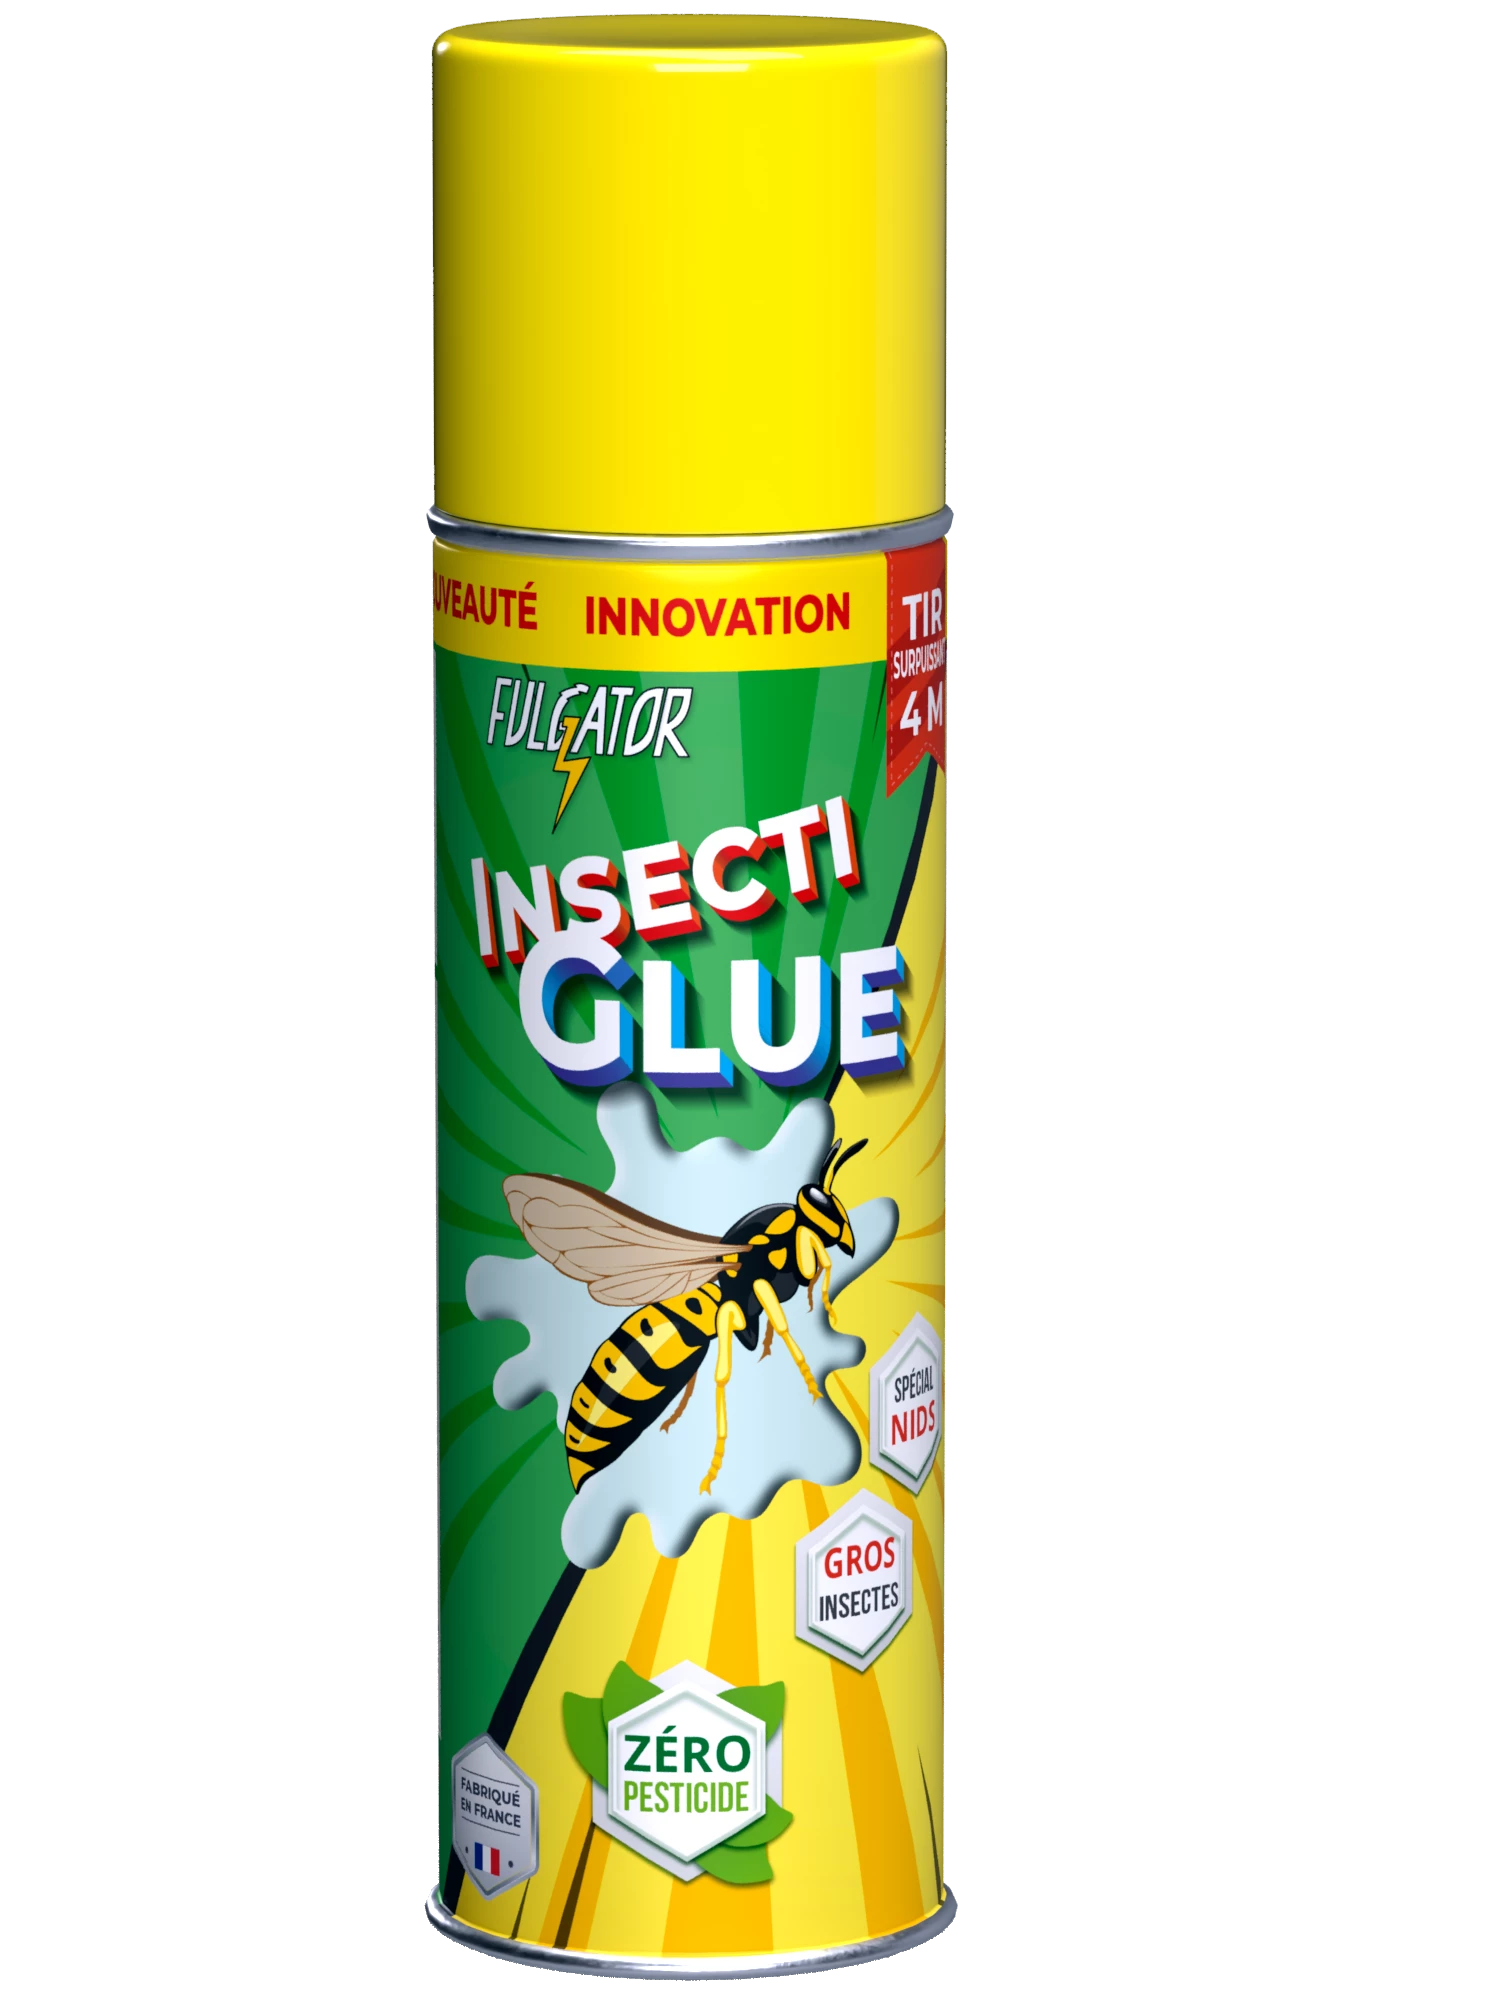 Insectiglue Fulgator